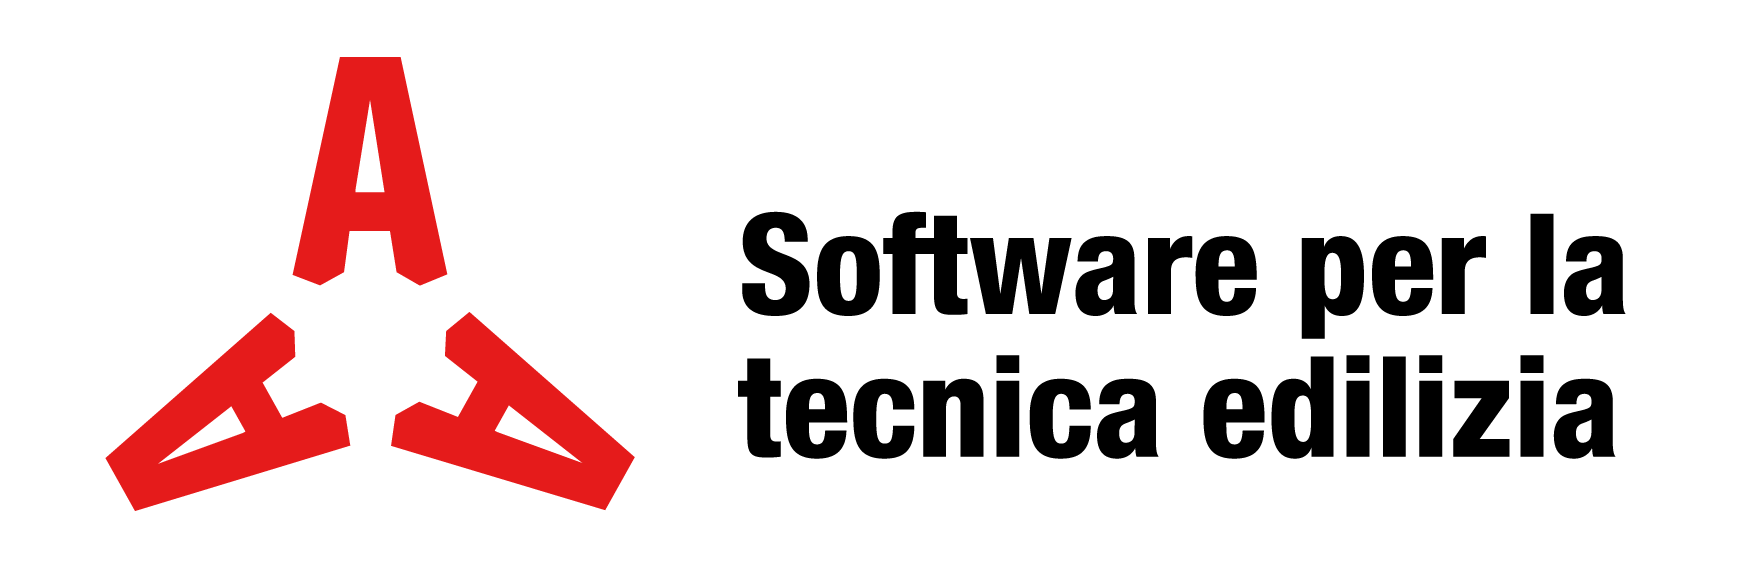 AAA EDV – Software für Haustechniker Logo